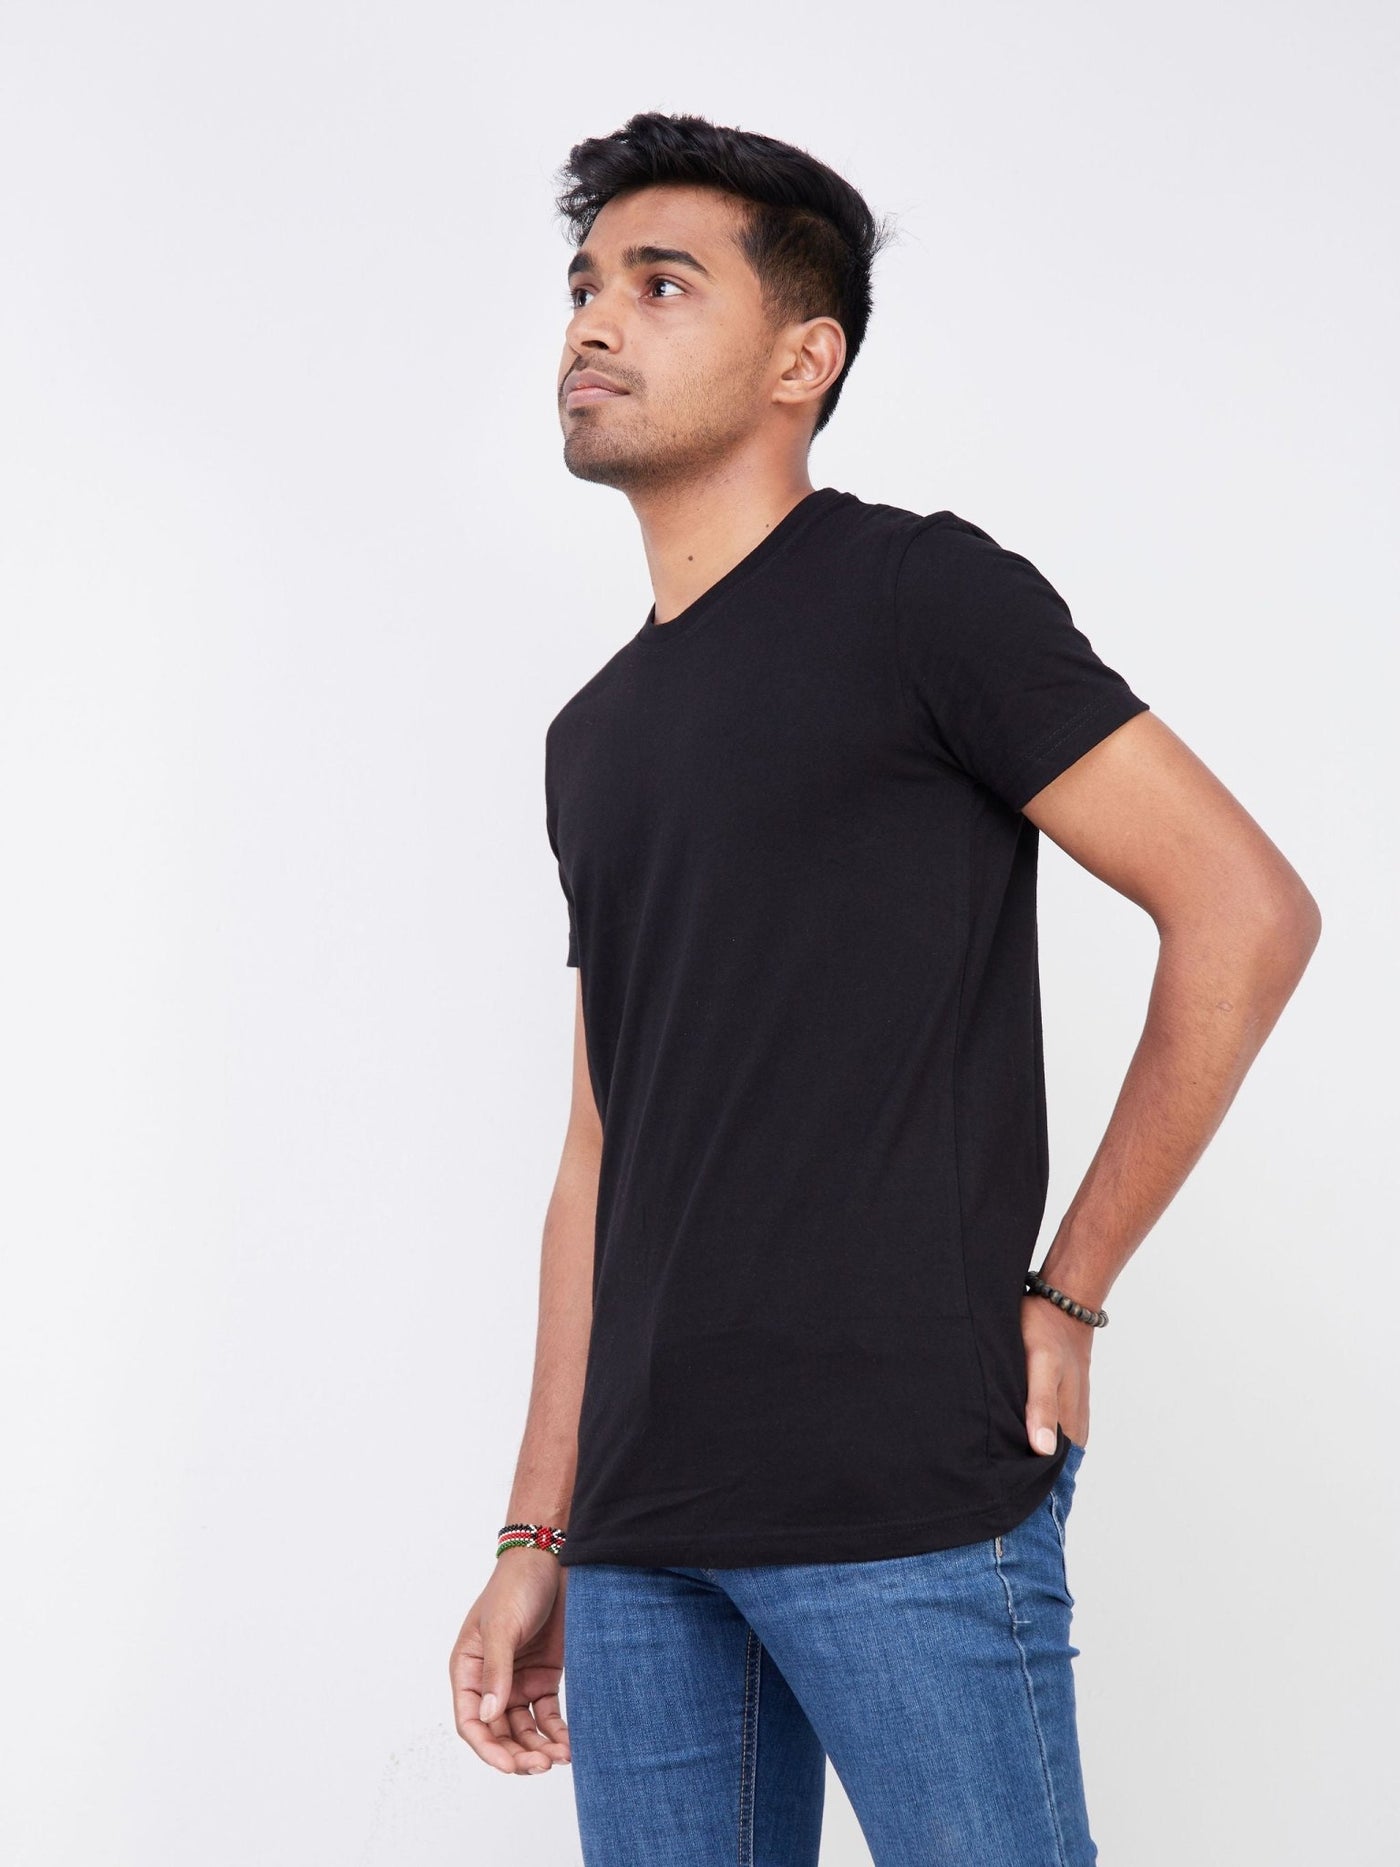 King's Collection Unisex Round Neck T-shirt - Black - Shop Zetu Kenya